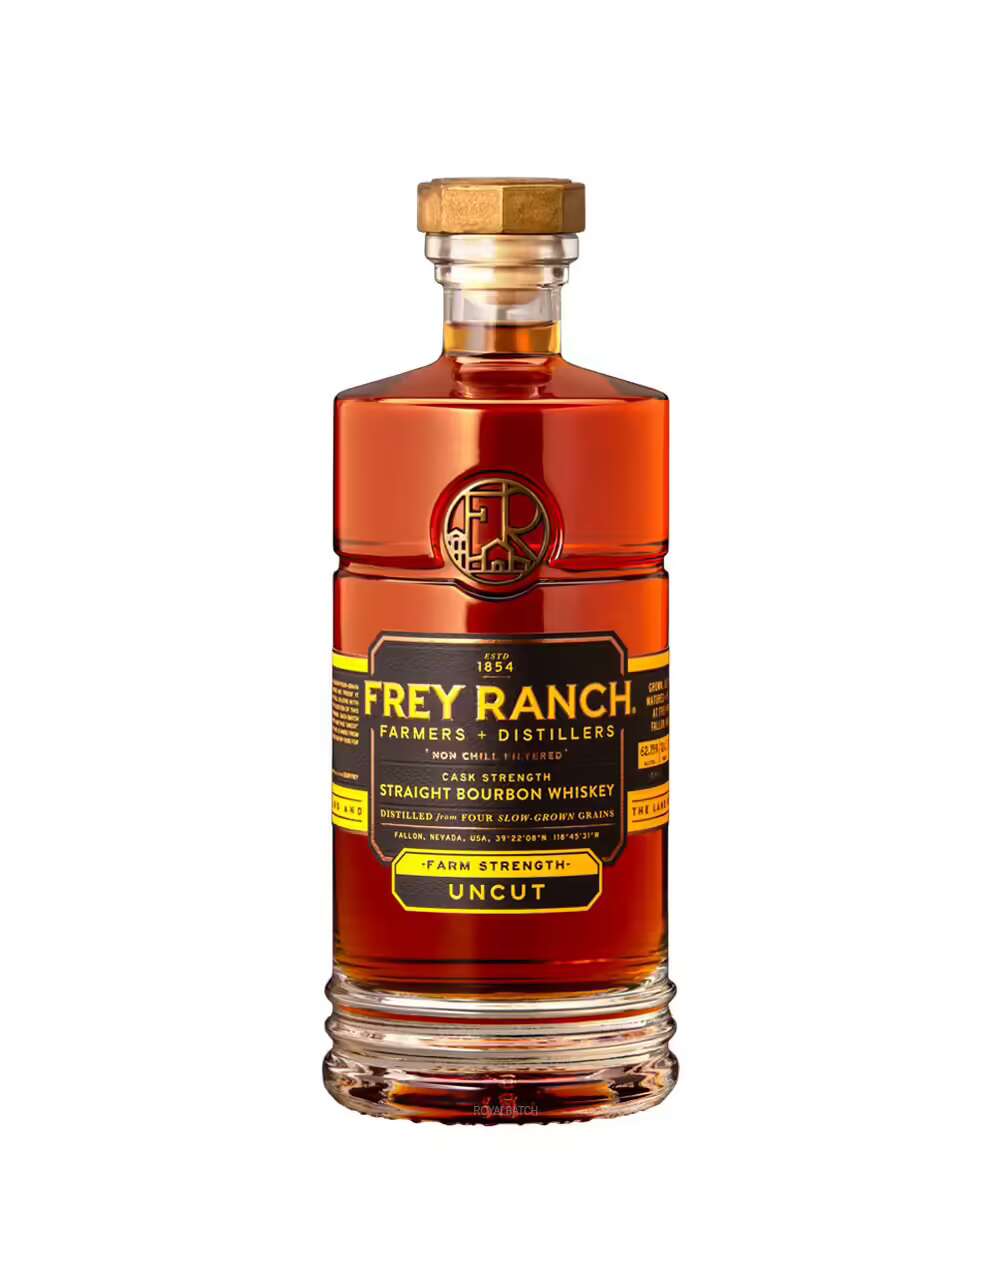 Frey Ranch Farm Strength Uncut Bourbon Whiskey